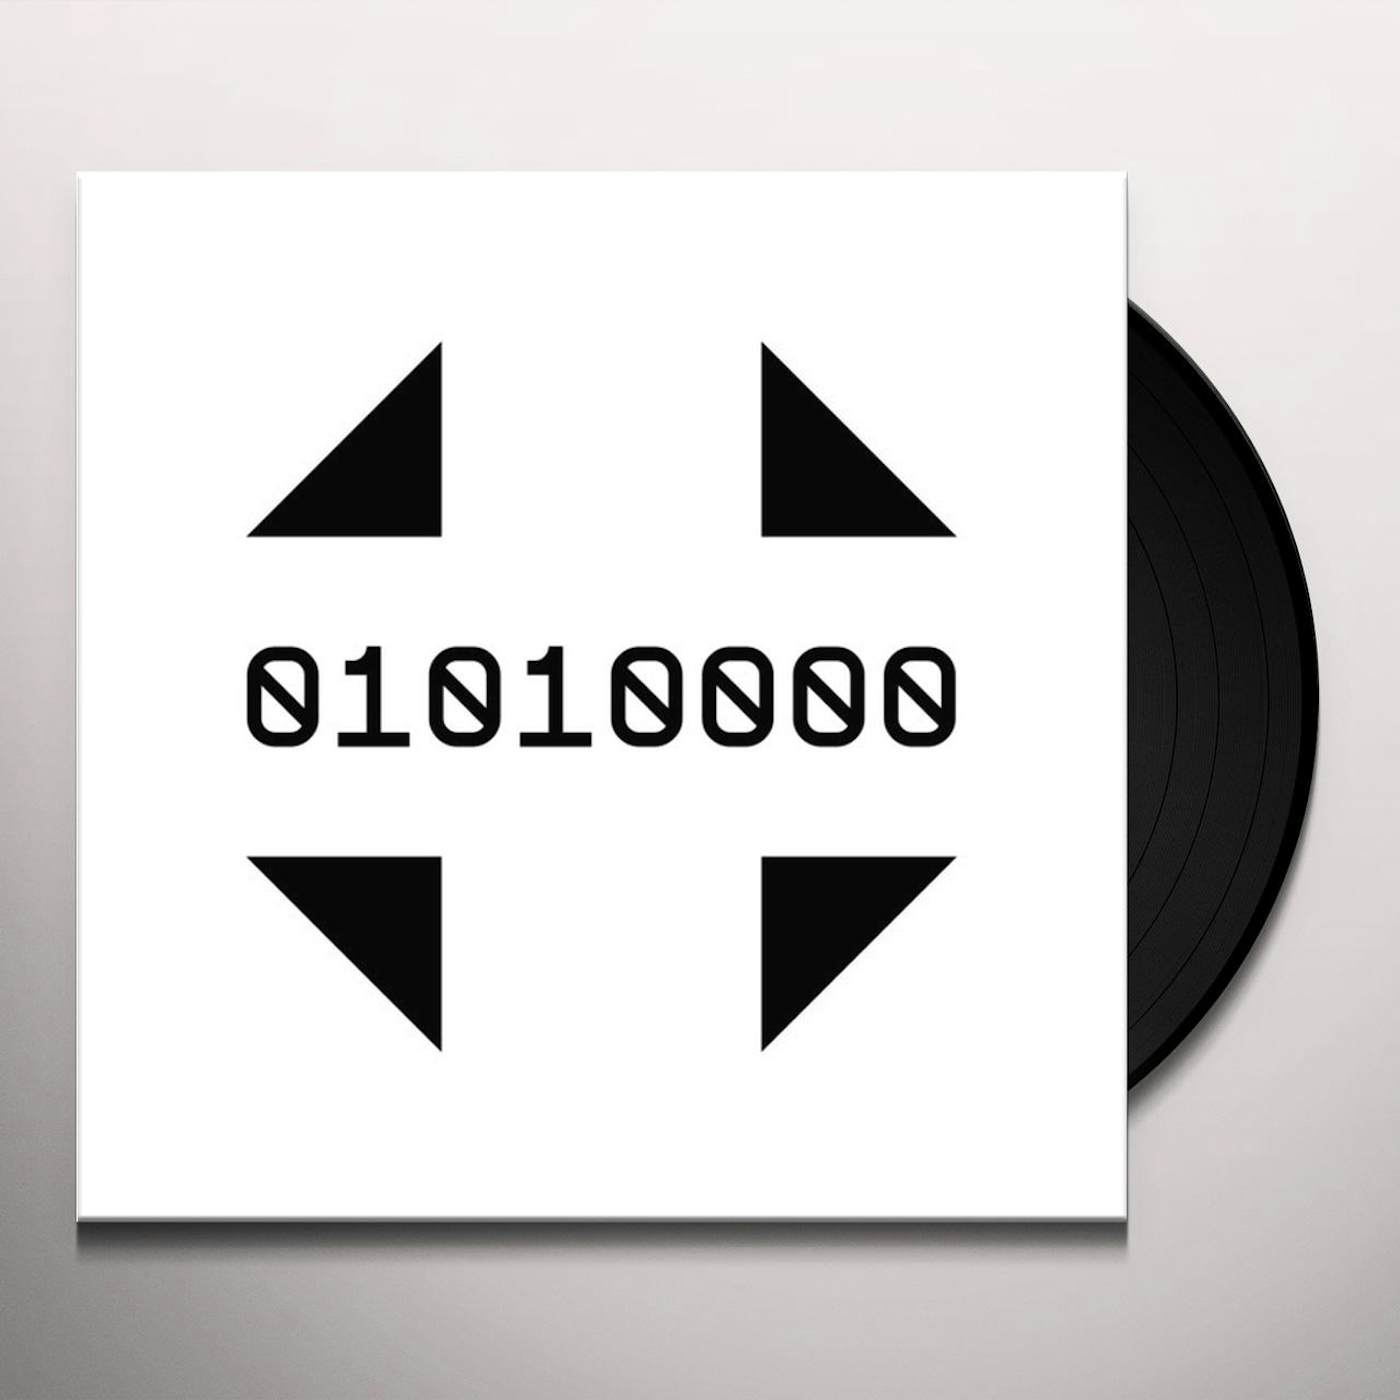 Datassette Kestrel Manoeuvres in the Dark Vinyl Record